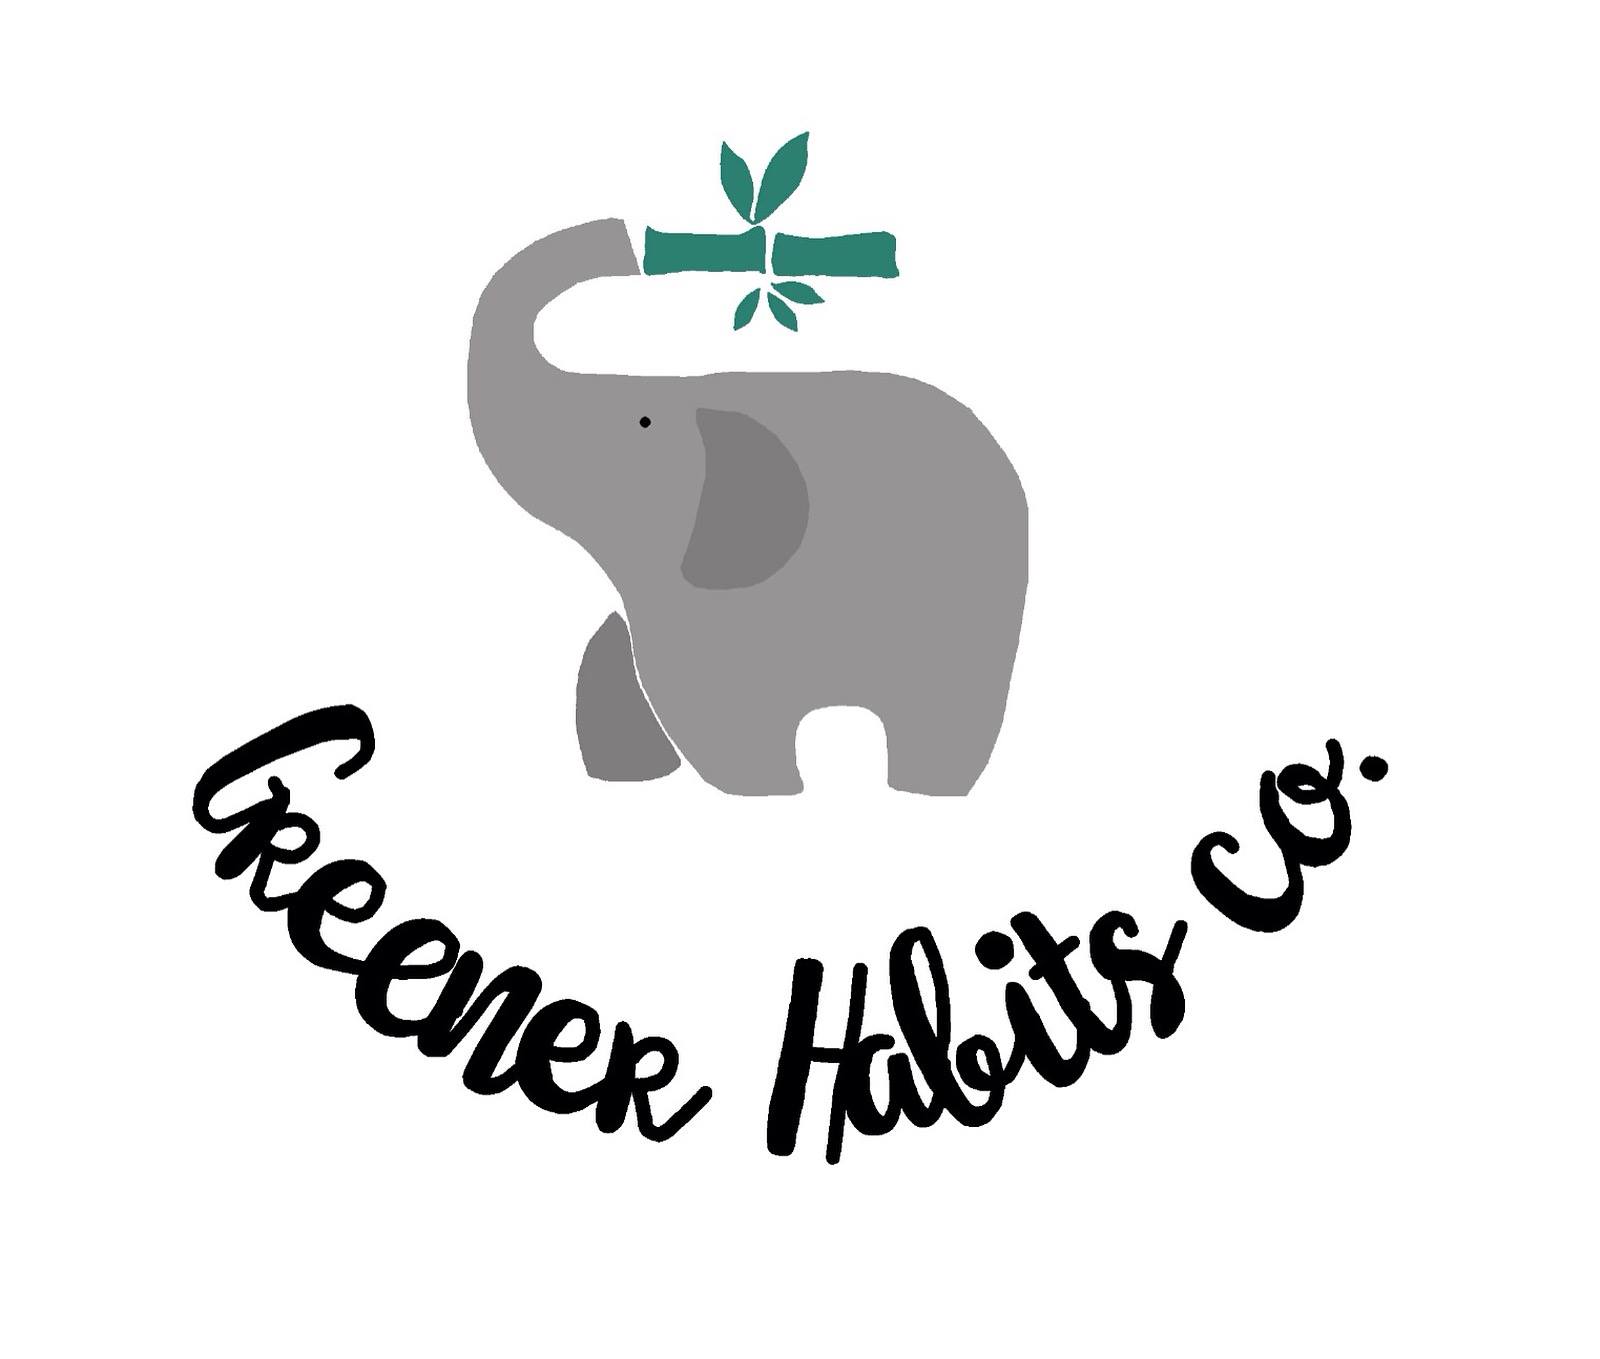 Greener Habits Co.